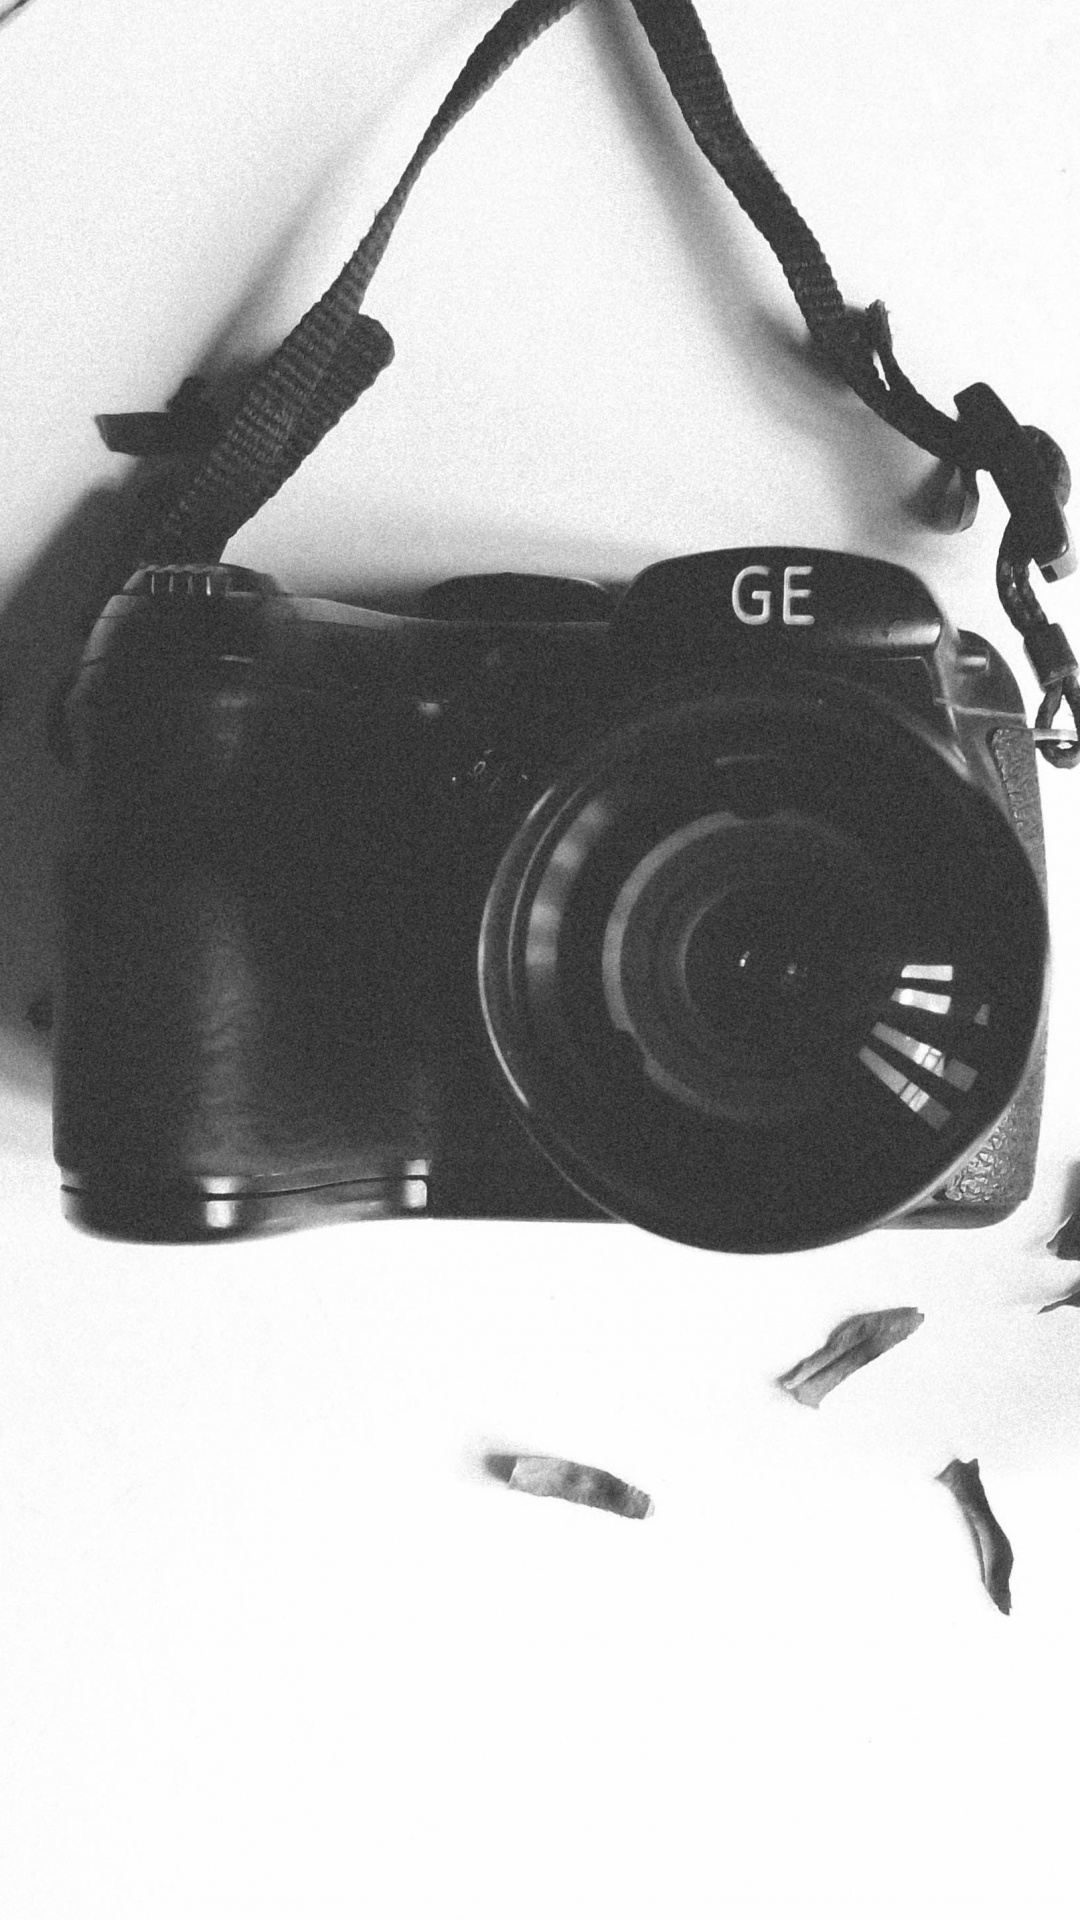 Black Nikon Dslr Camera on White Textile. Wallpaper in 1080x1920 Resolution